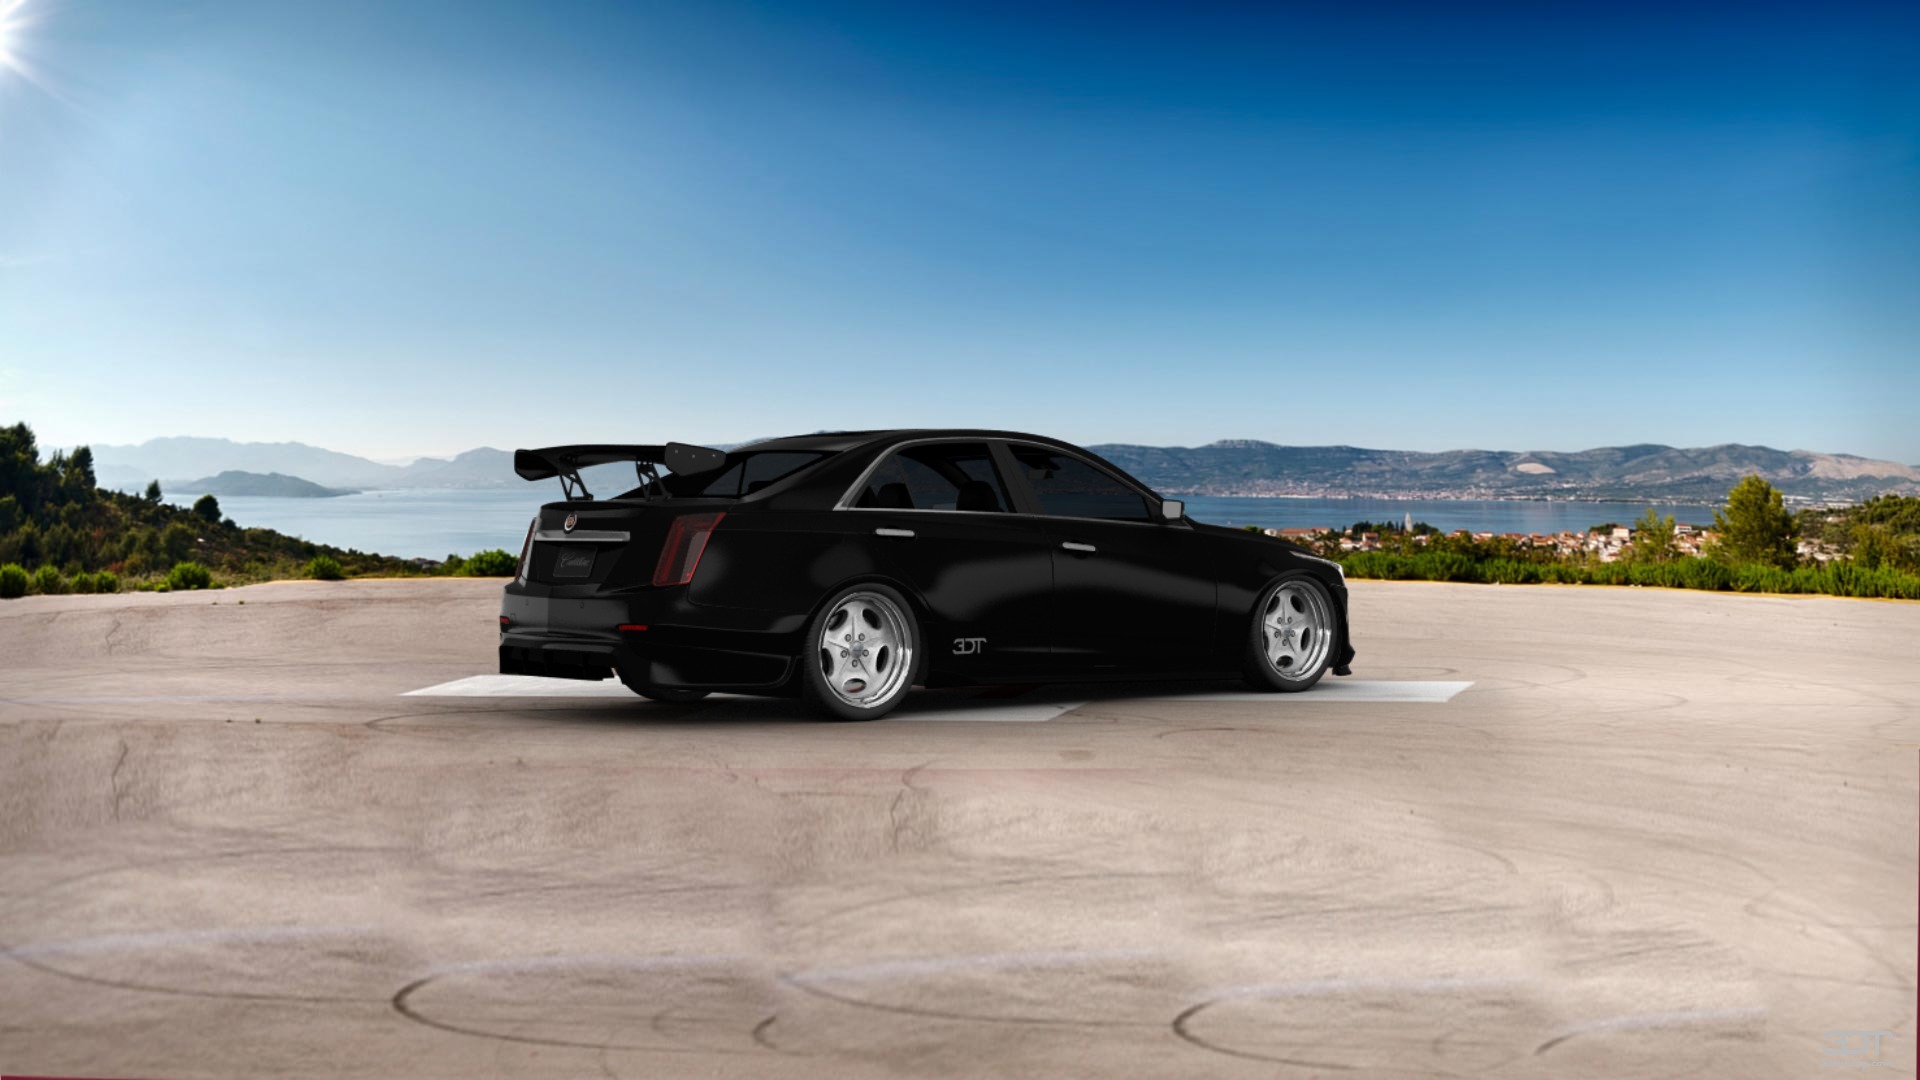 Cadillac CTS Sedan 2014